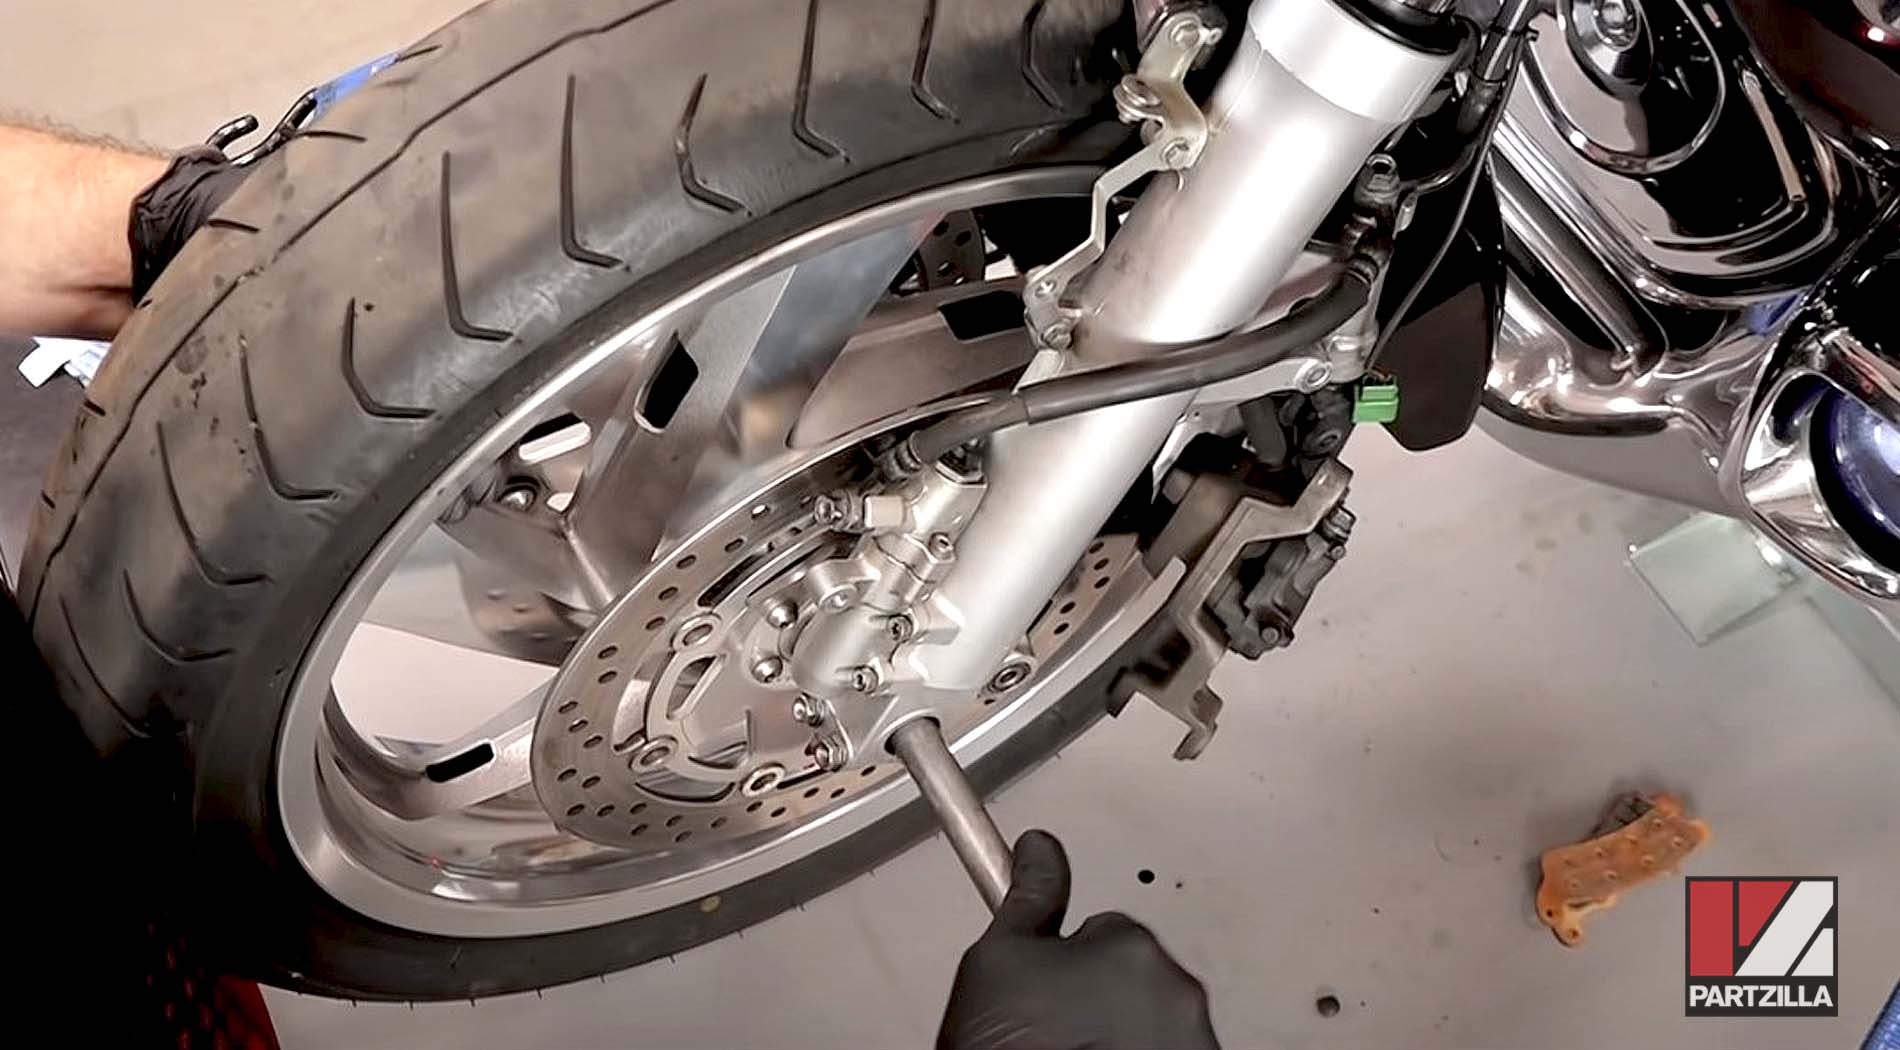 Honda Goldwing GL1800 brakes rubbing sound